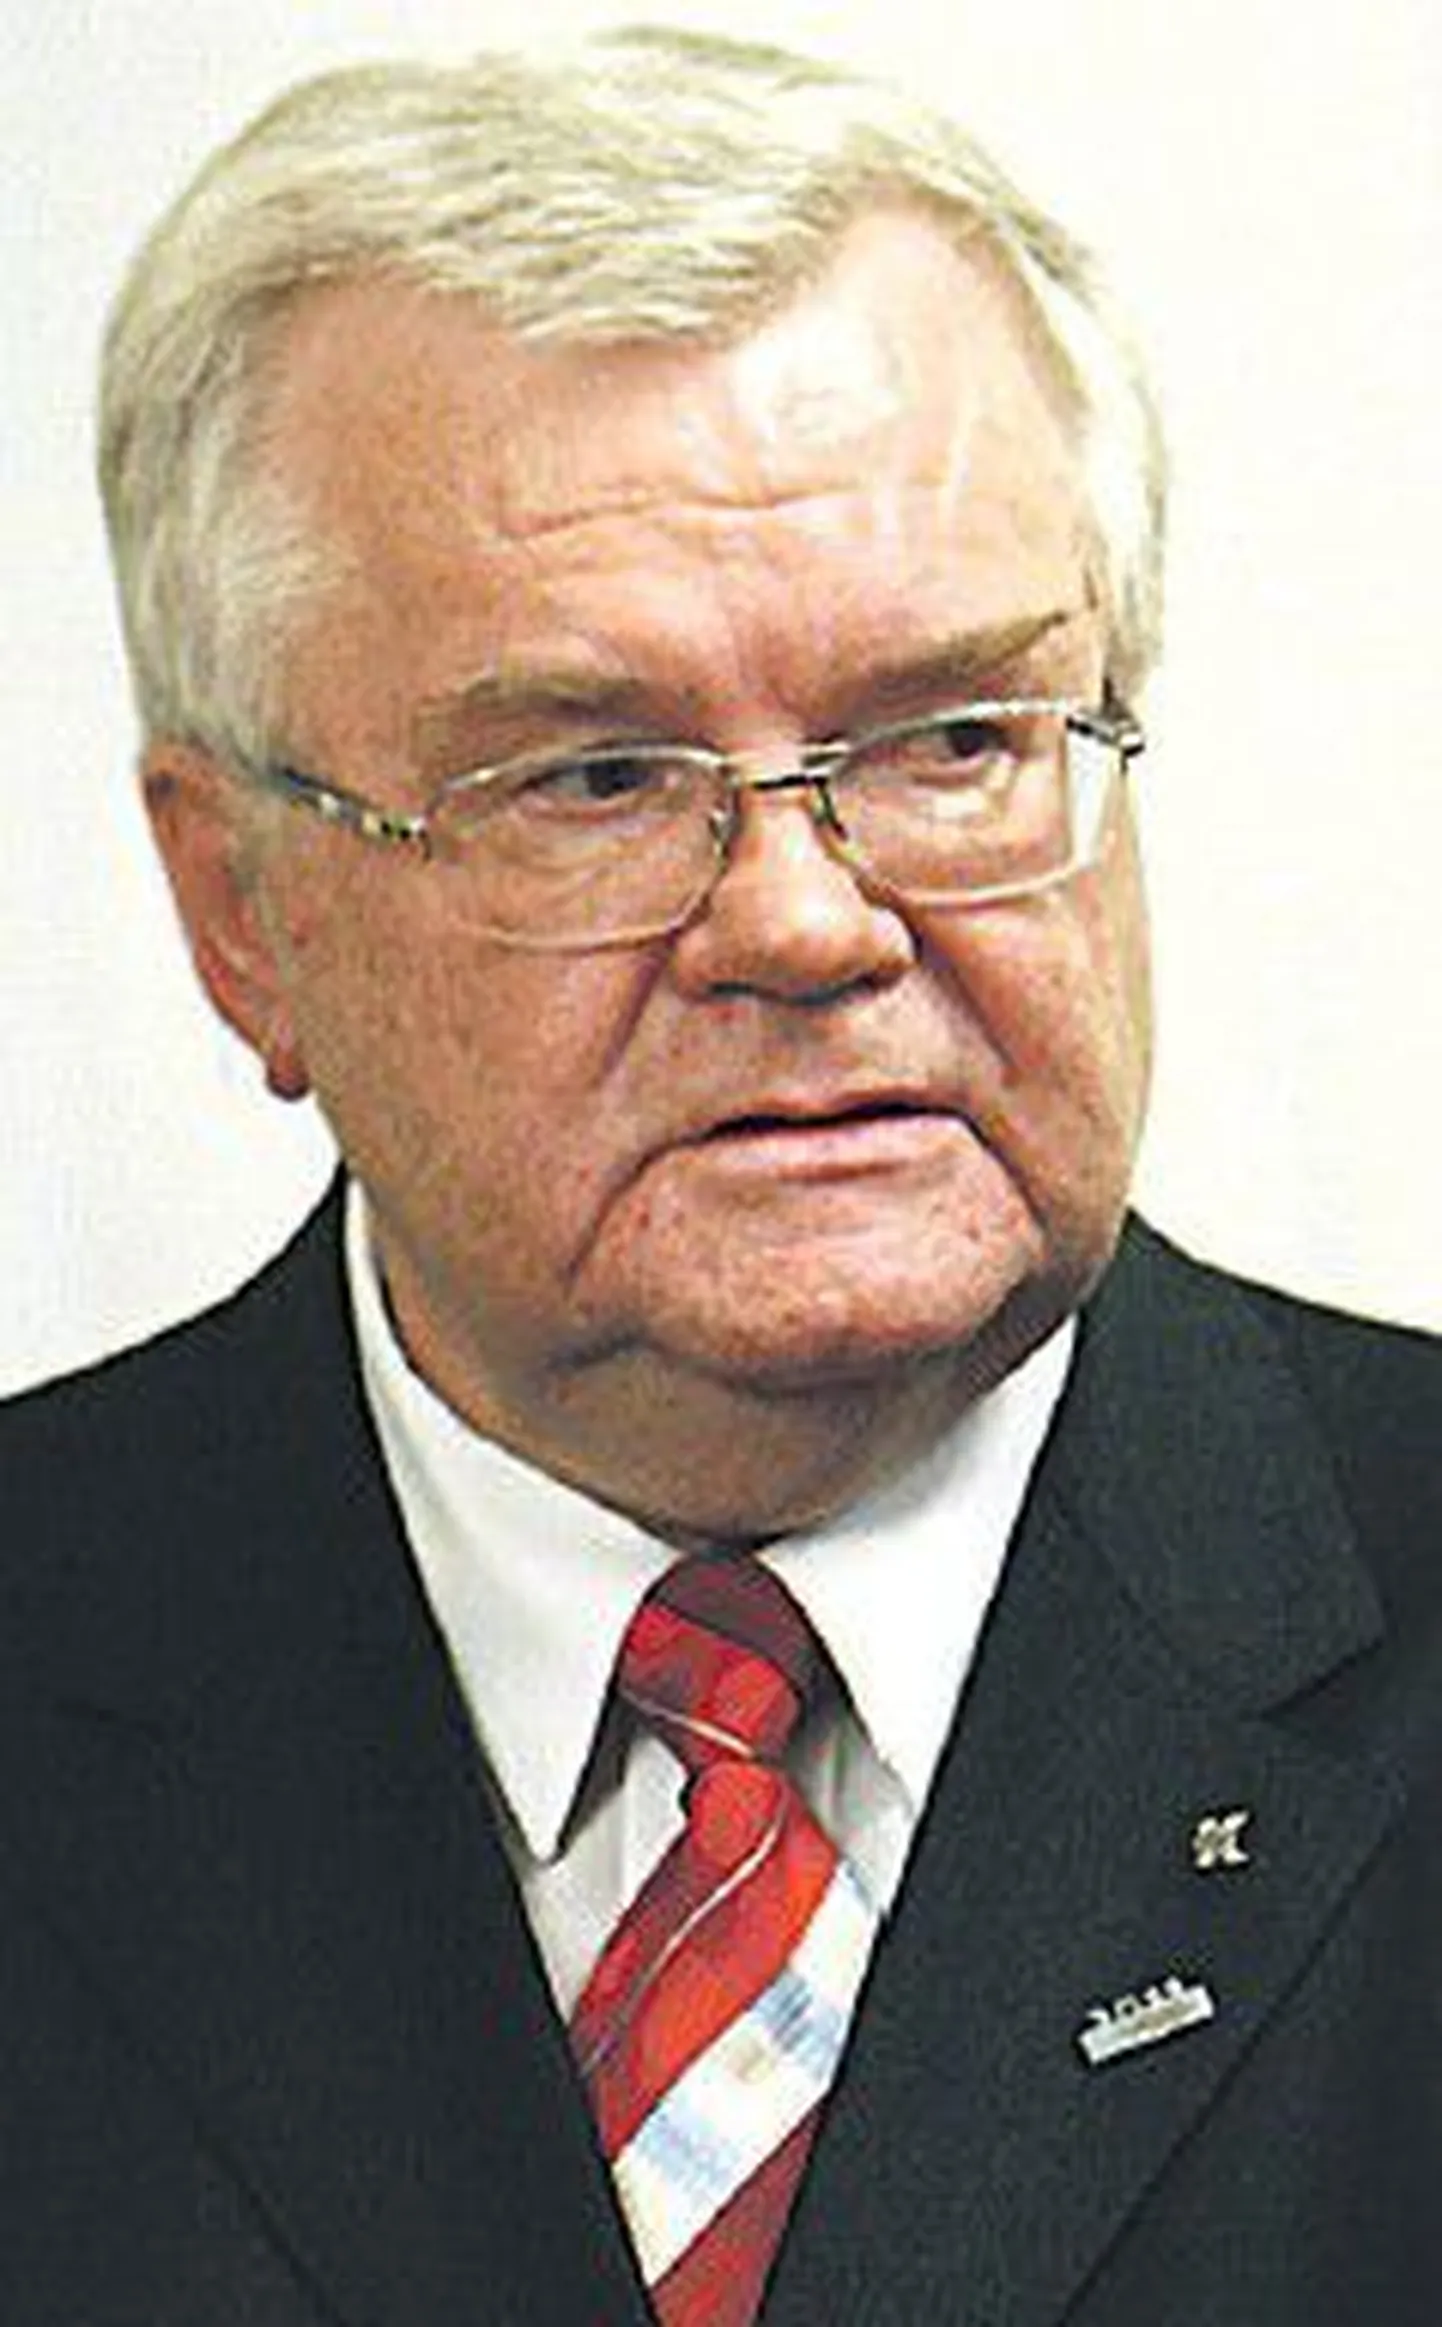 Эдгар Сависаар,
мэр города Таллинна,
председатель Центристской партии